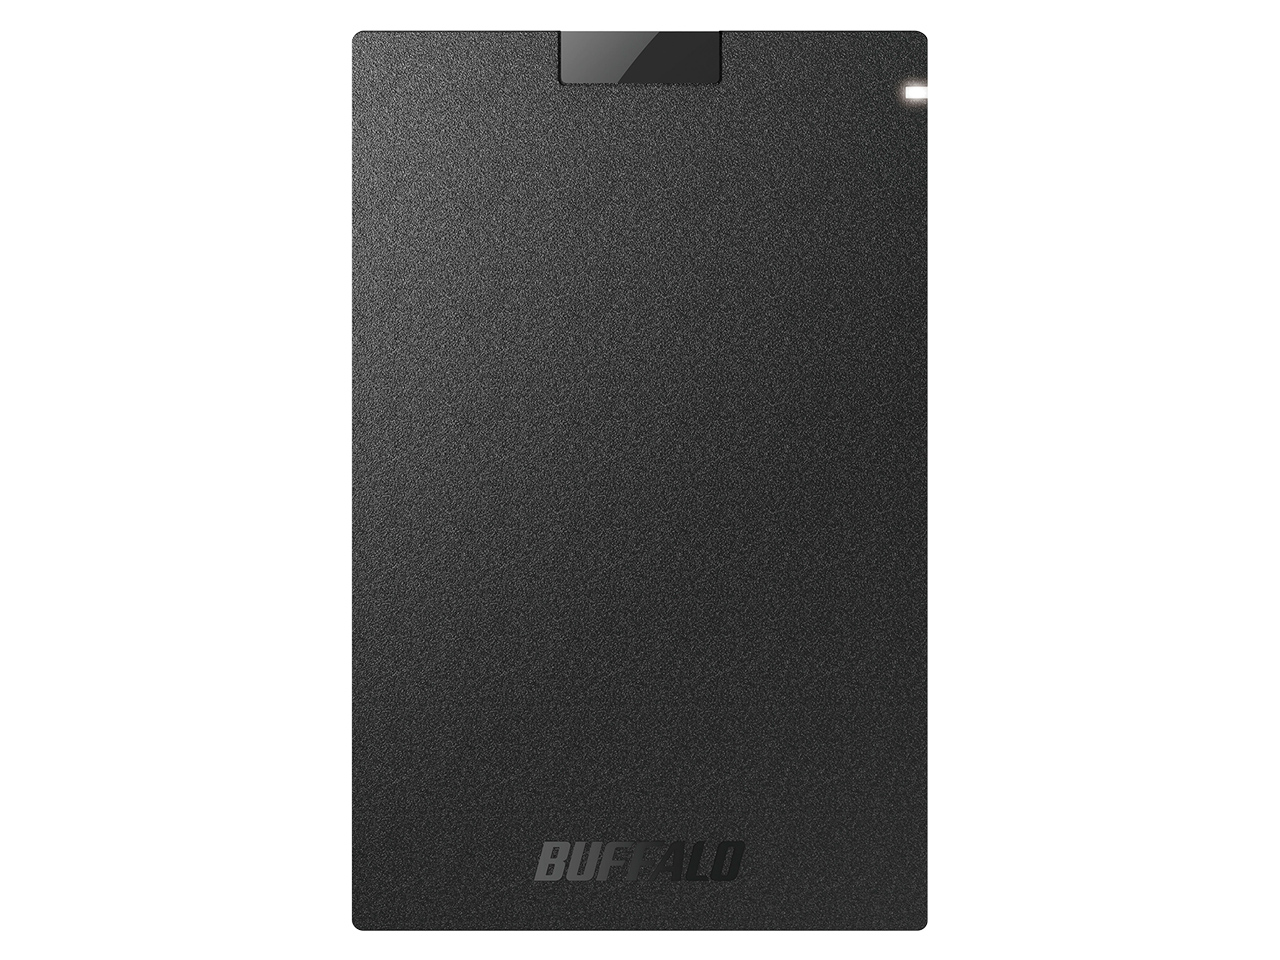 SSD-PG2.0U3-BC/N [ブラック]